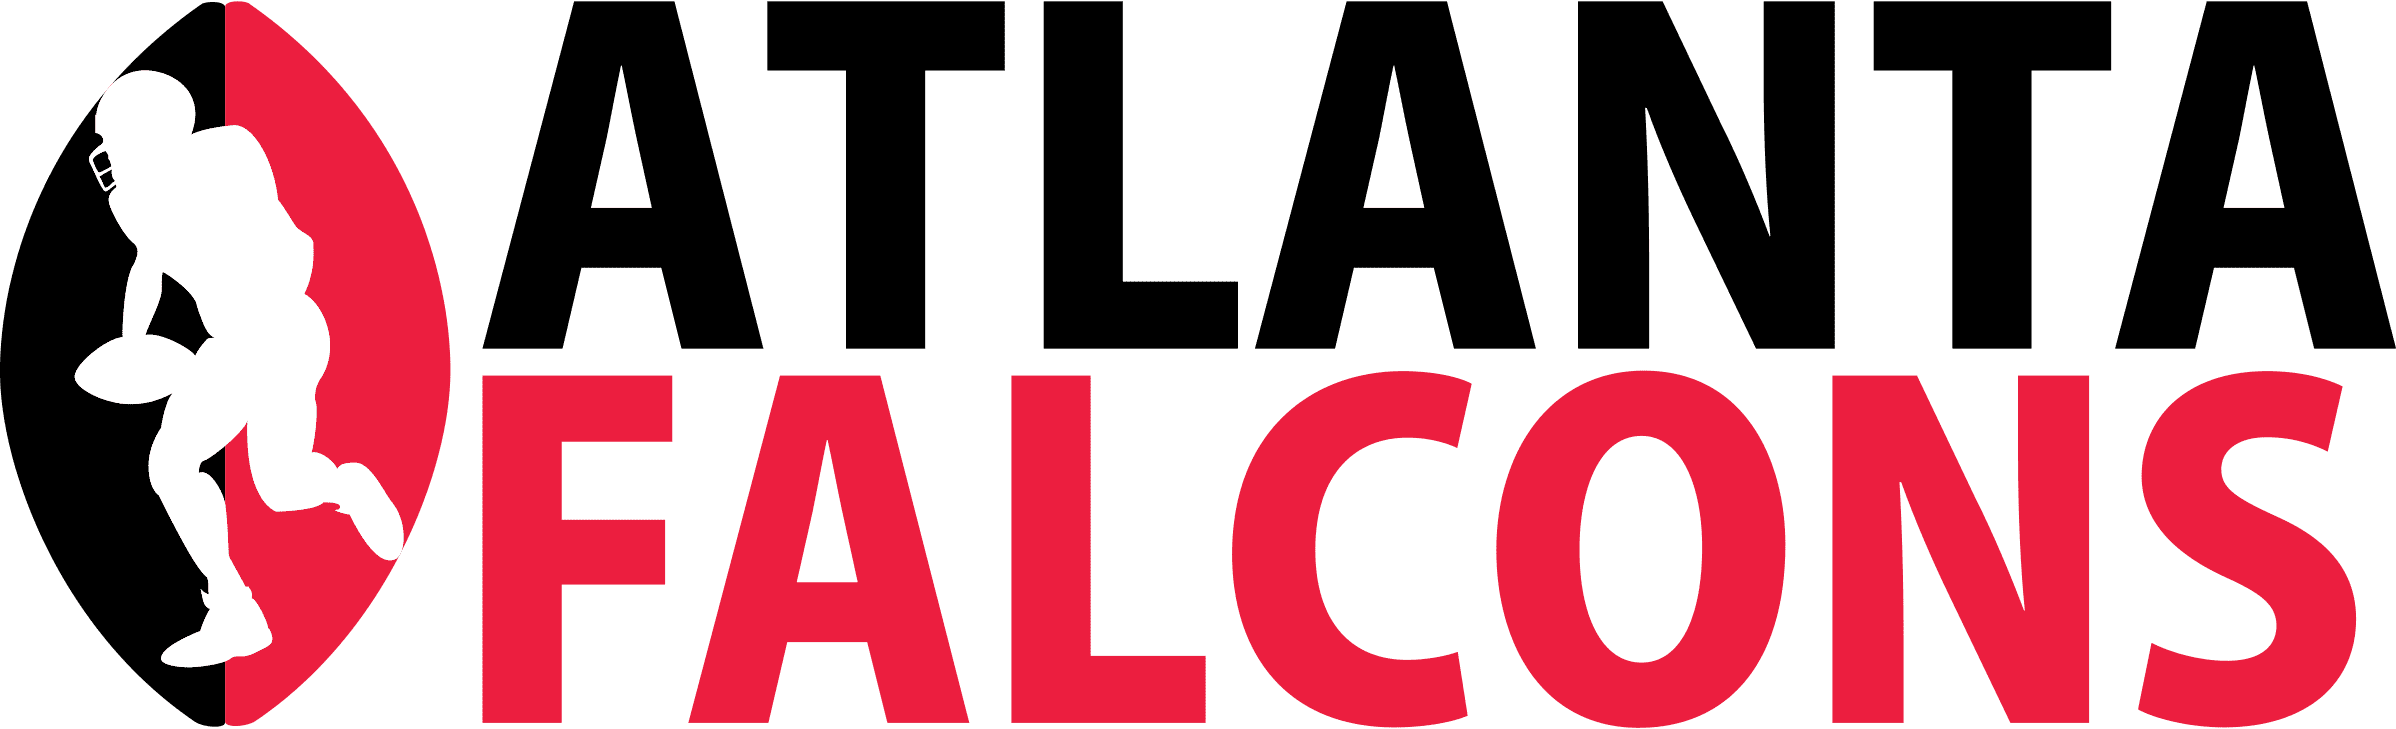 Atlanta Falcons Logo No Background Png All Png All